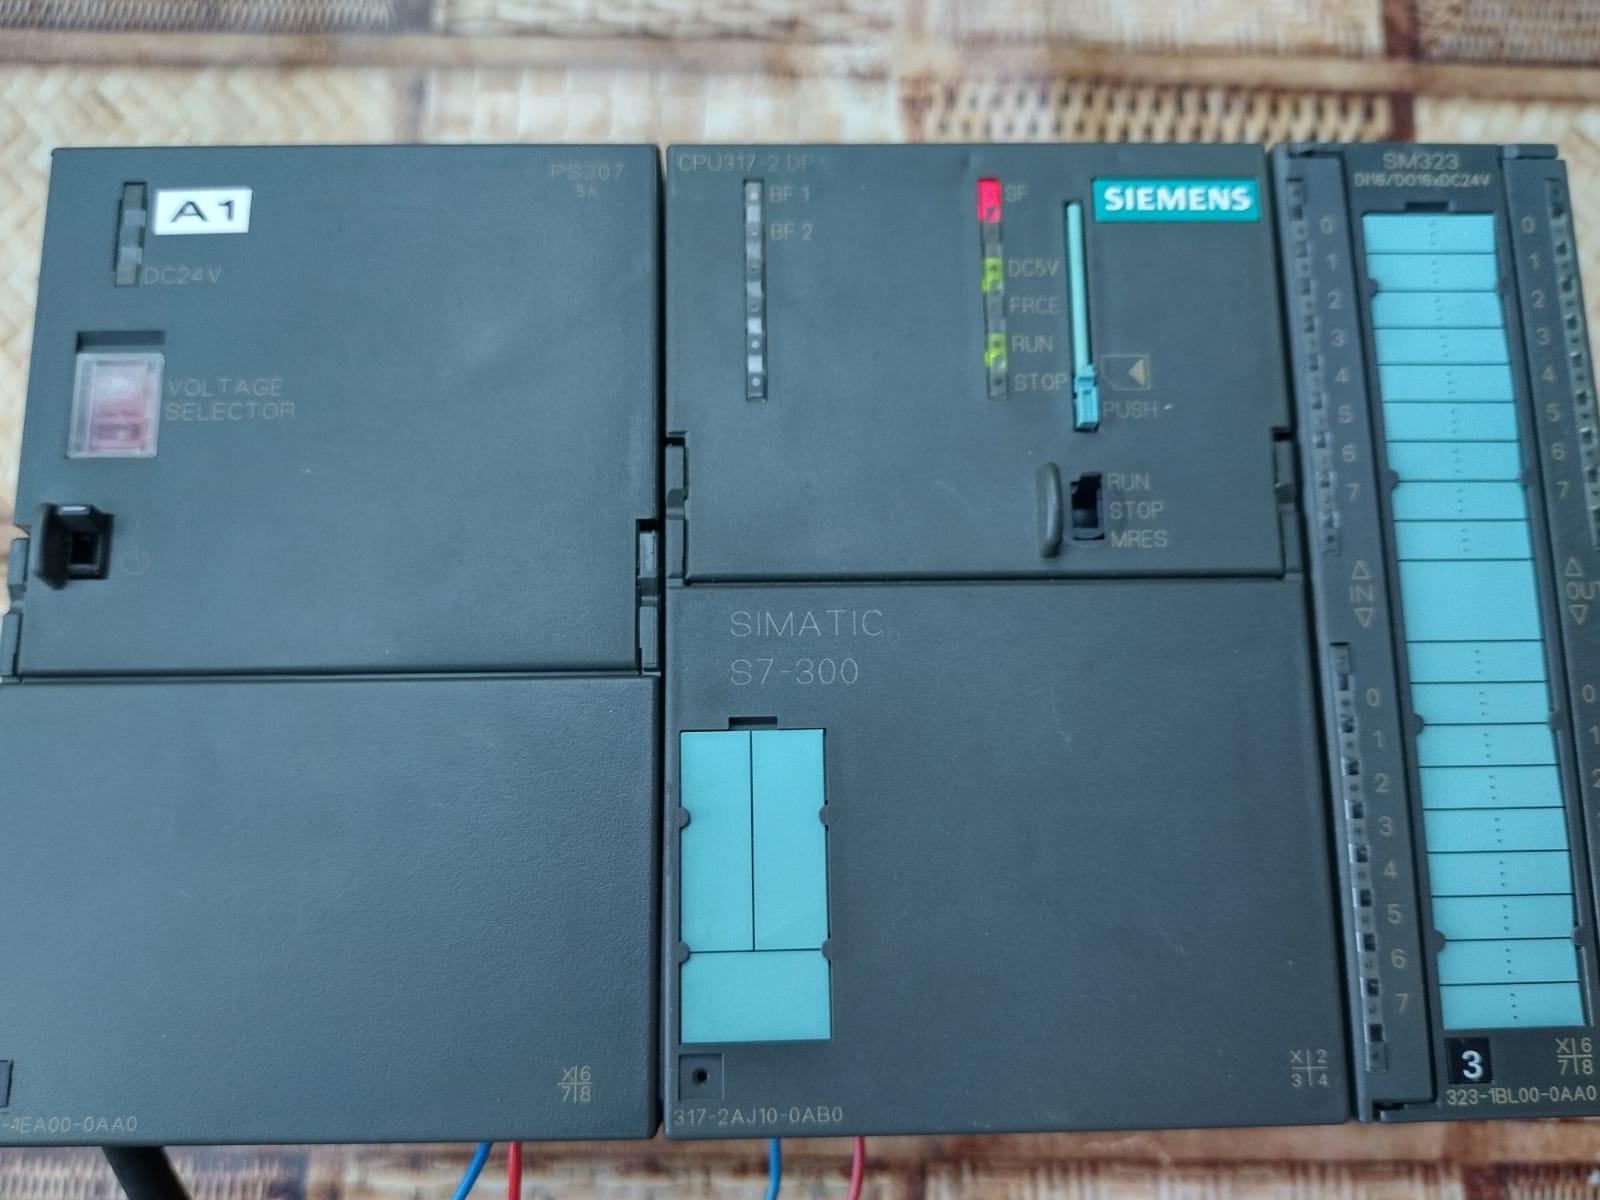 Siemens Simatic S7-300 CPU317-2DP 6ES7317-2AJ10-0AB0+ Memory card - Elektro